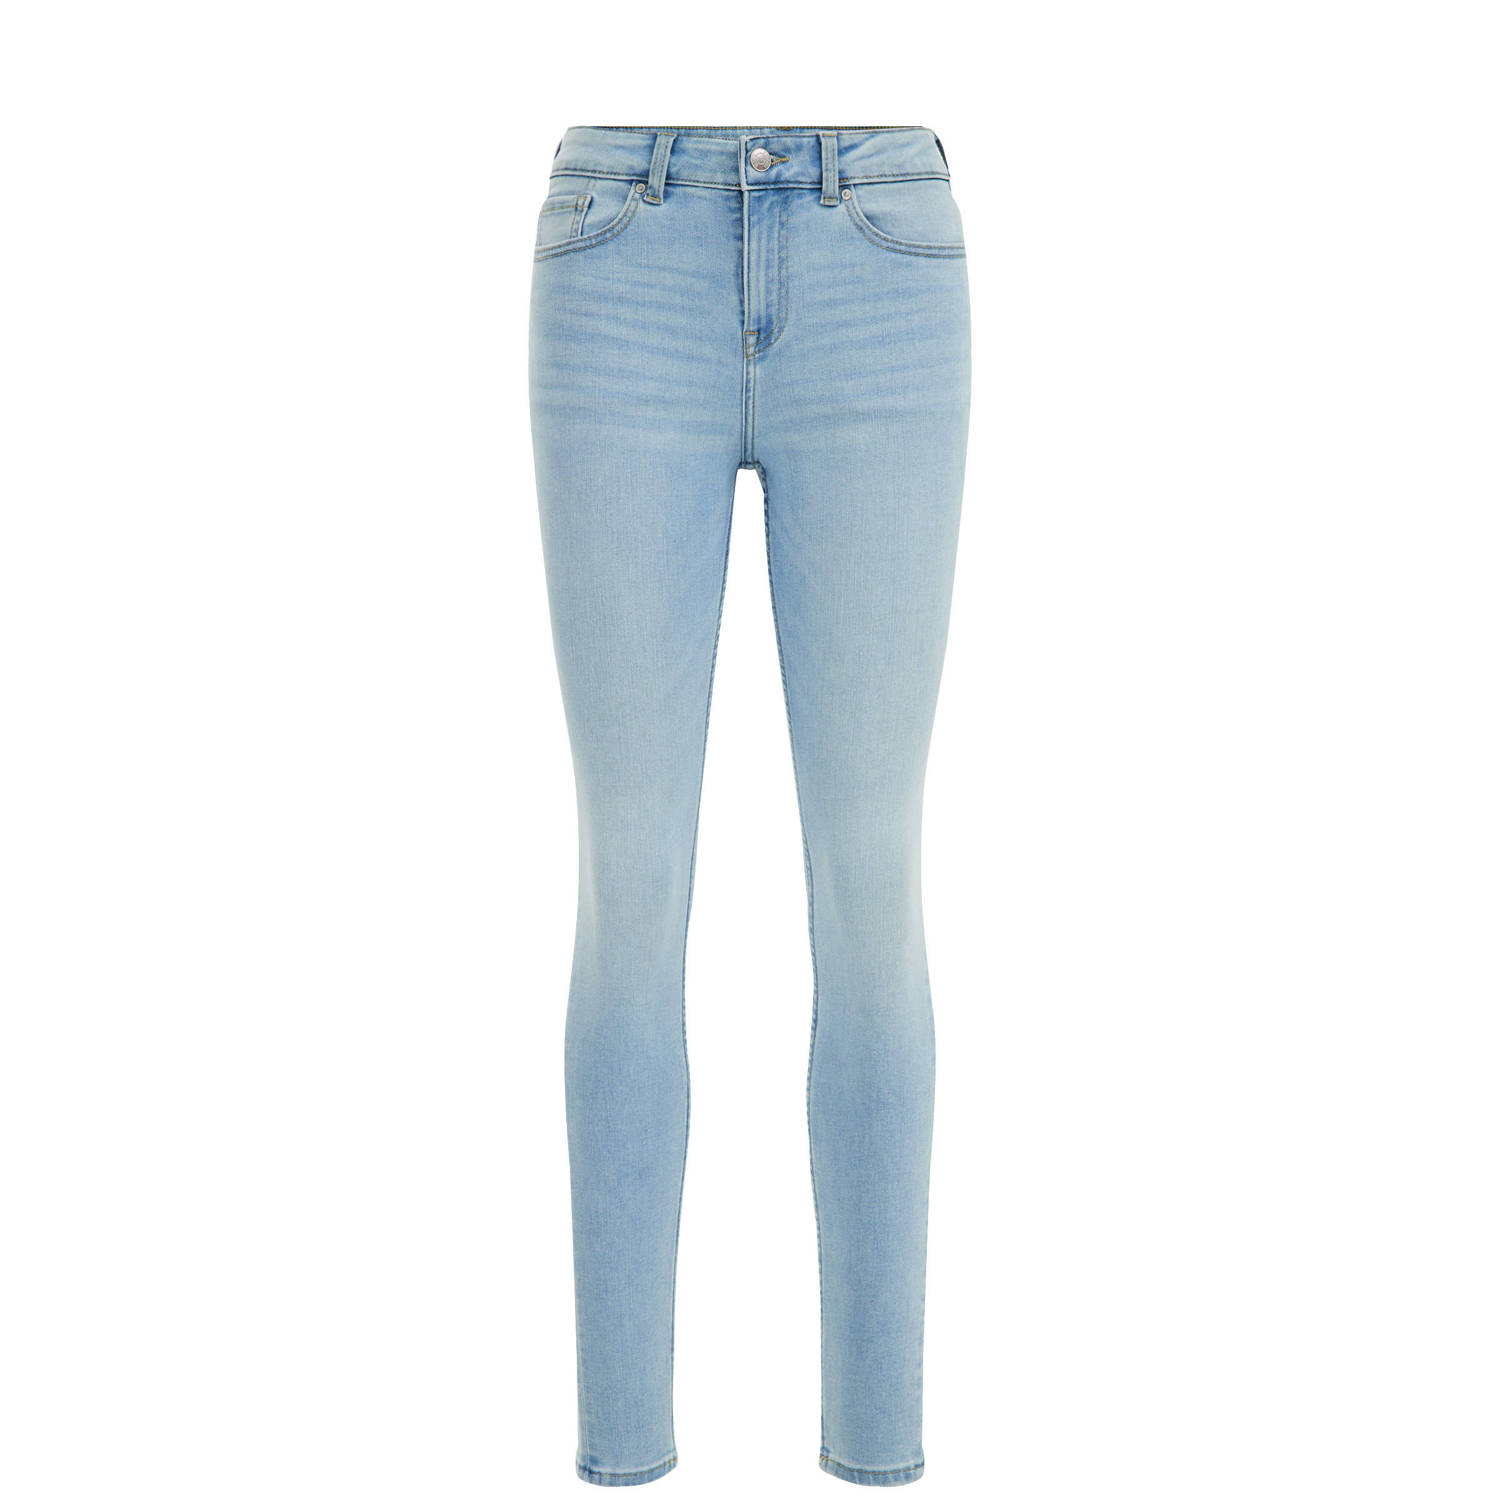 WE Fashion Blue Ridge skinny jeans light blue denim